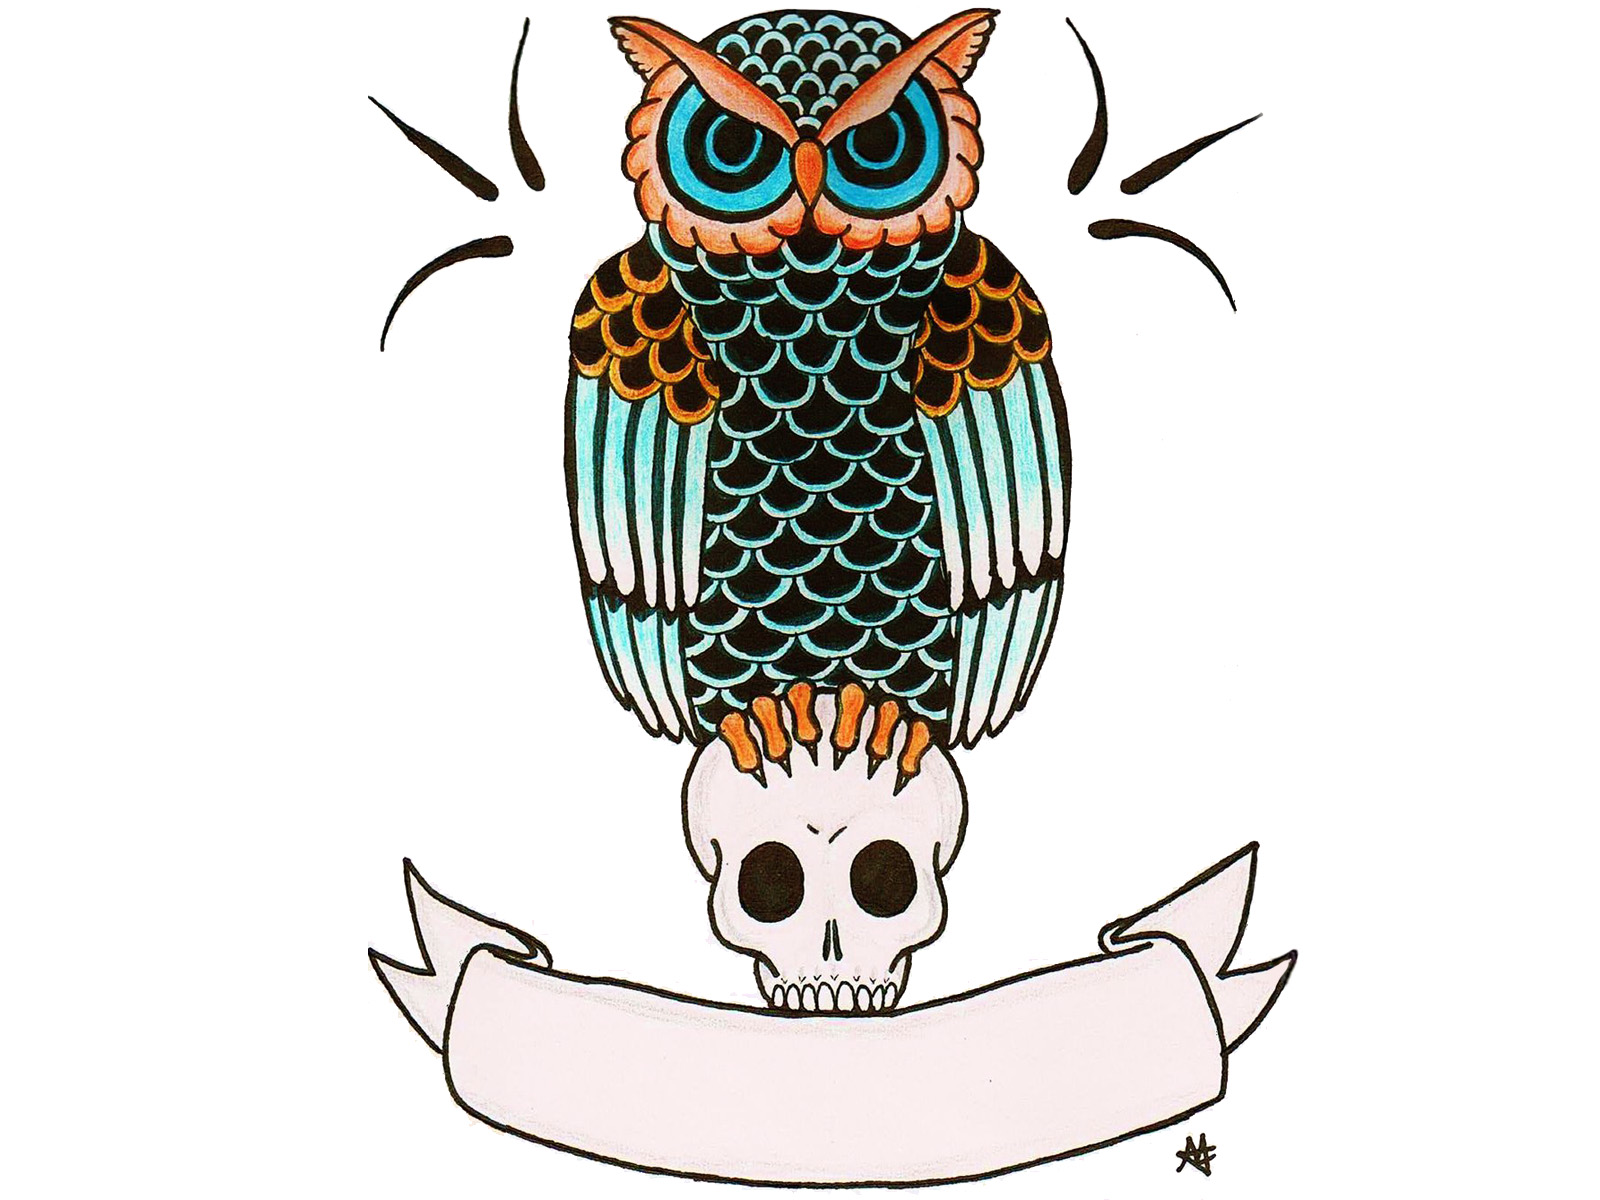 6. Owl tattoo symbolism - wide 2